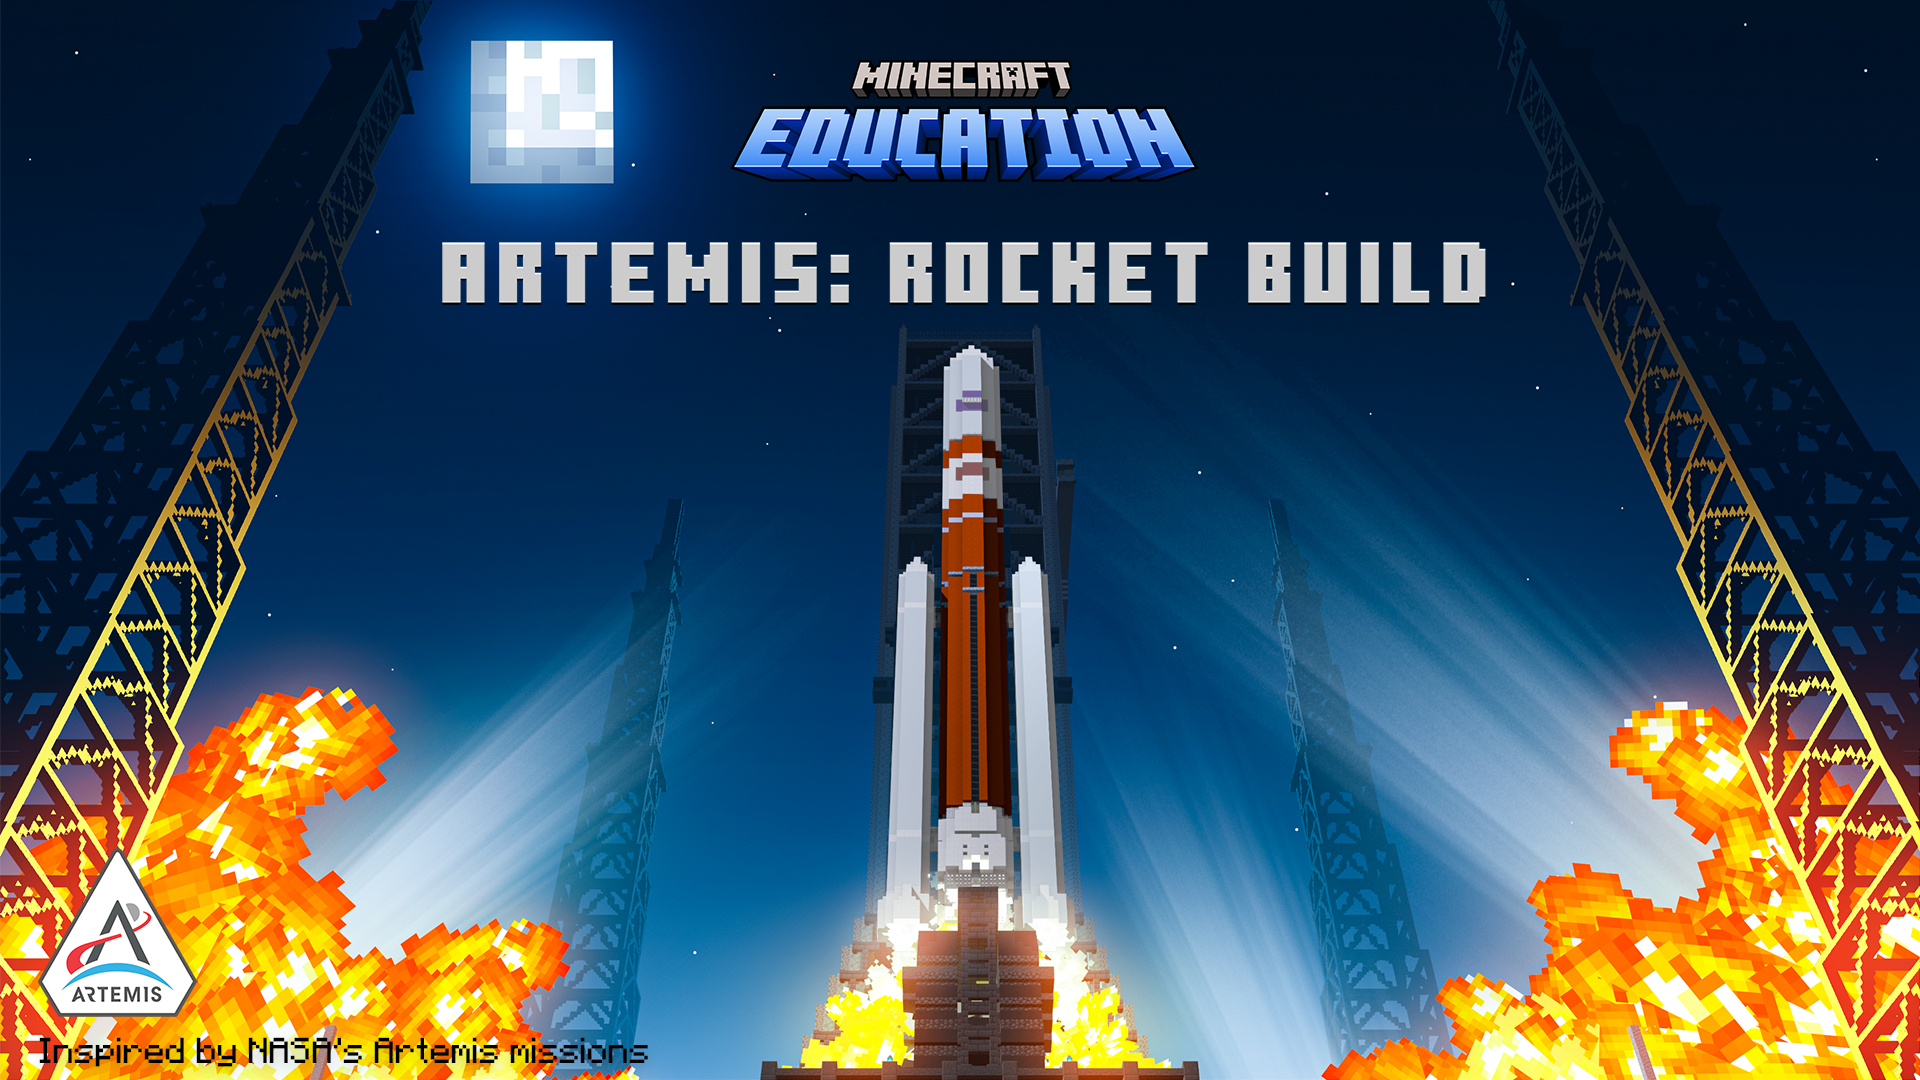 Minecraft Education Artemis Rocket Art